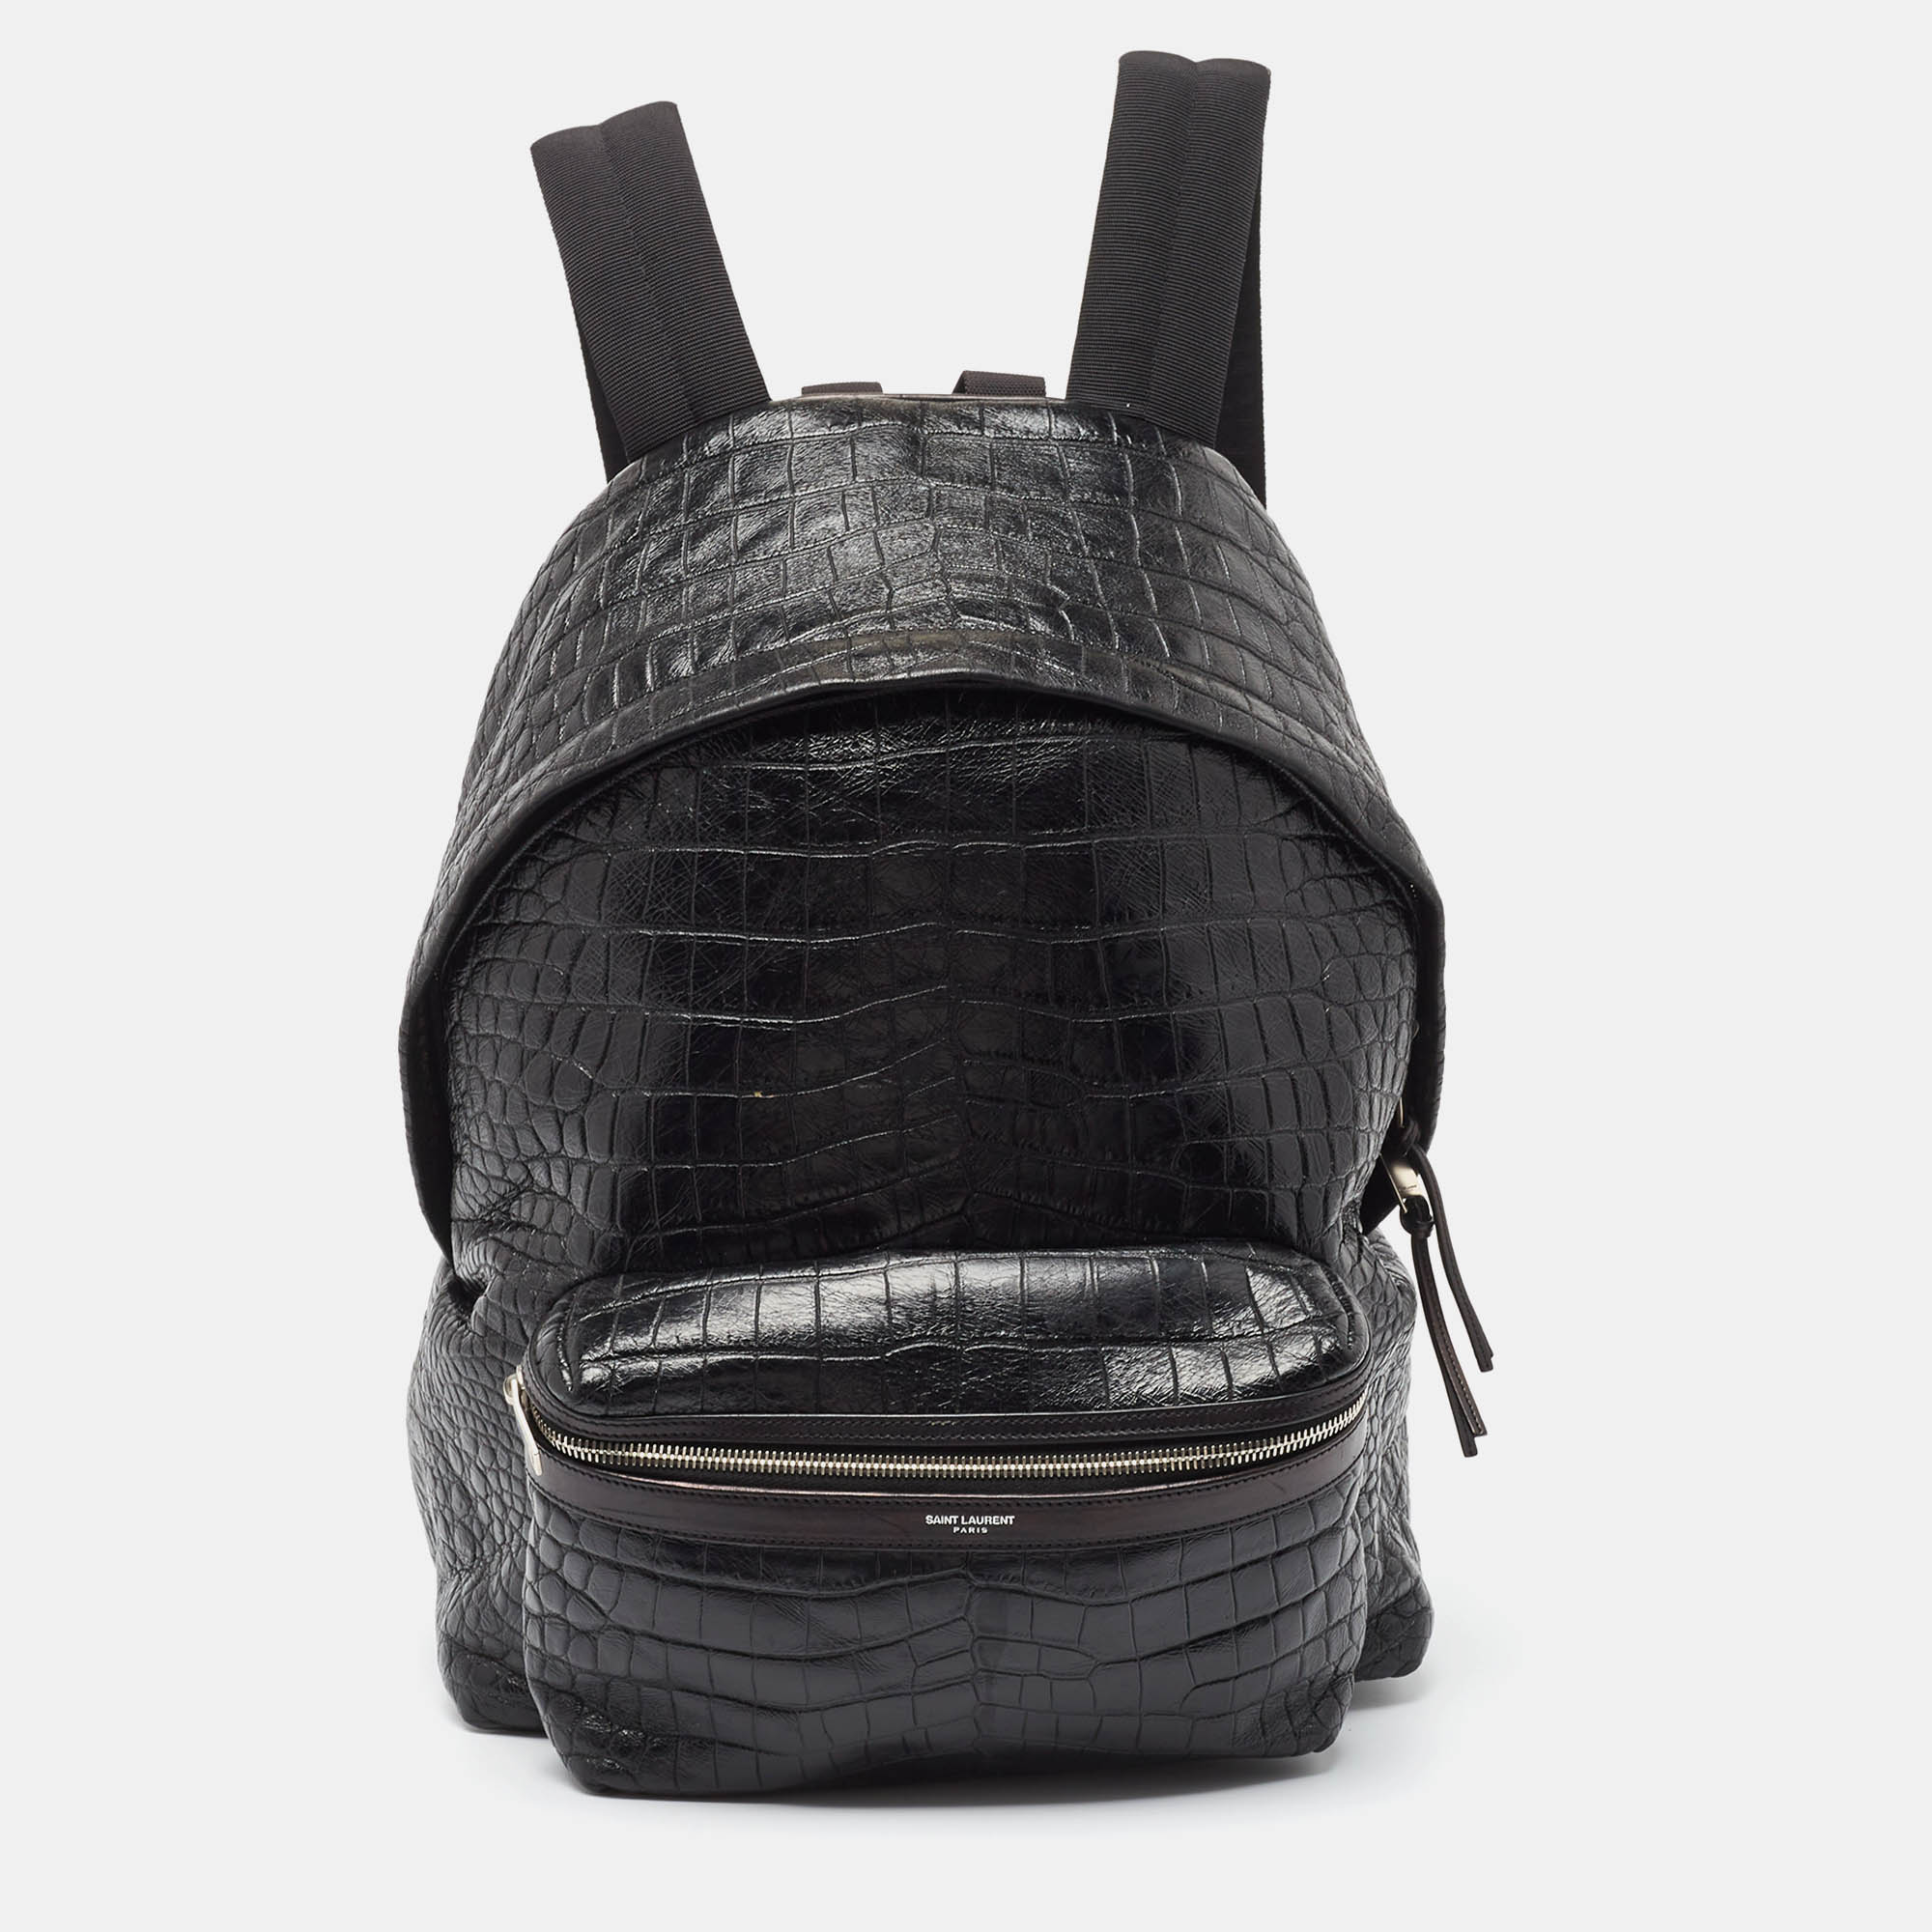 Saint Laurent Black Croc Embossed Leather City Backpack